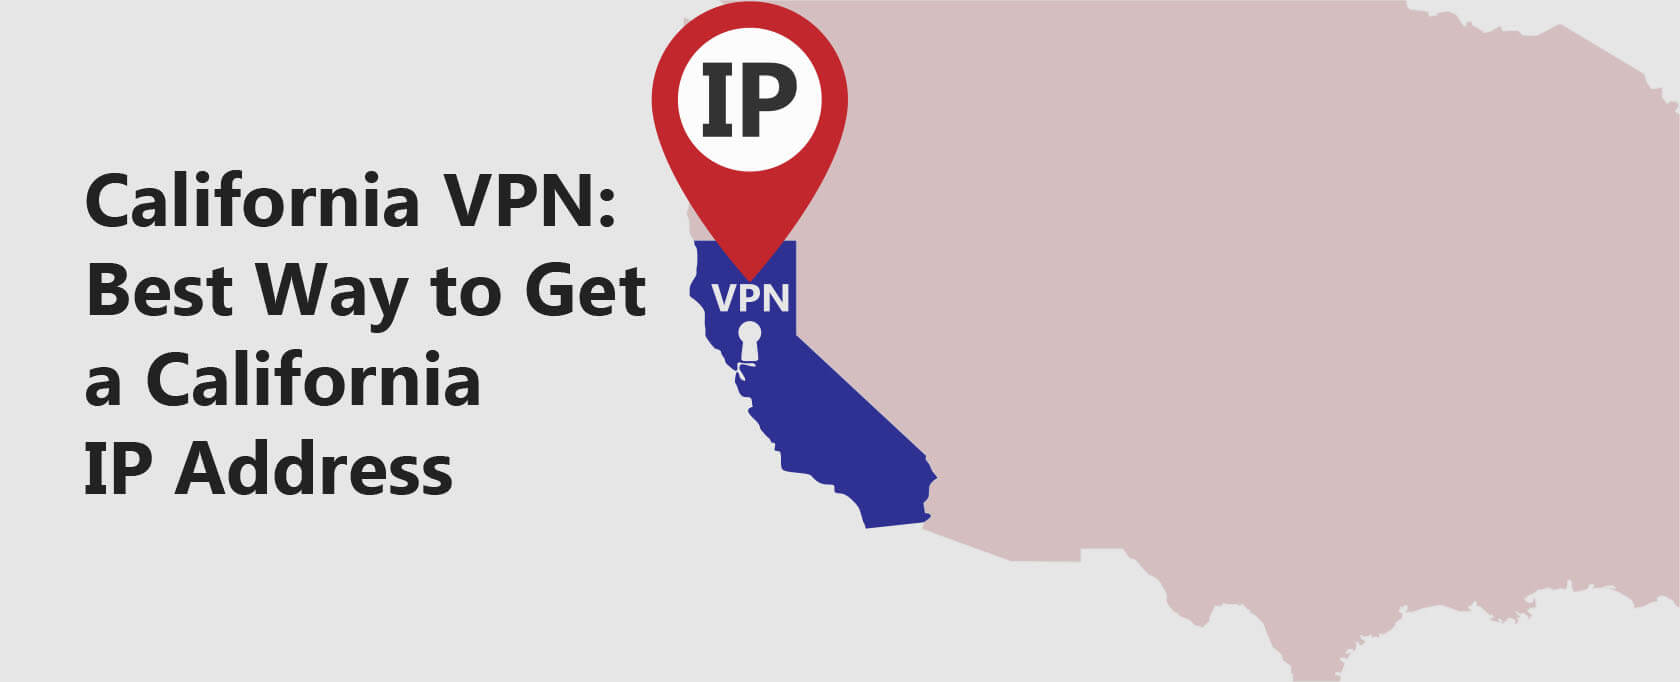 California VPN: Best Way to Get a California IP Address